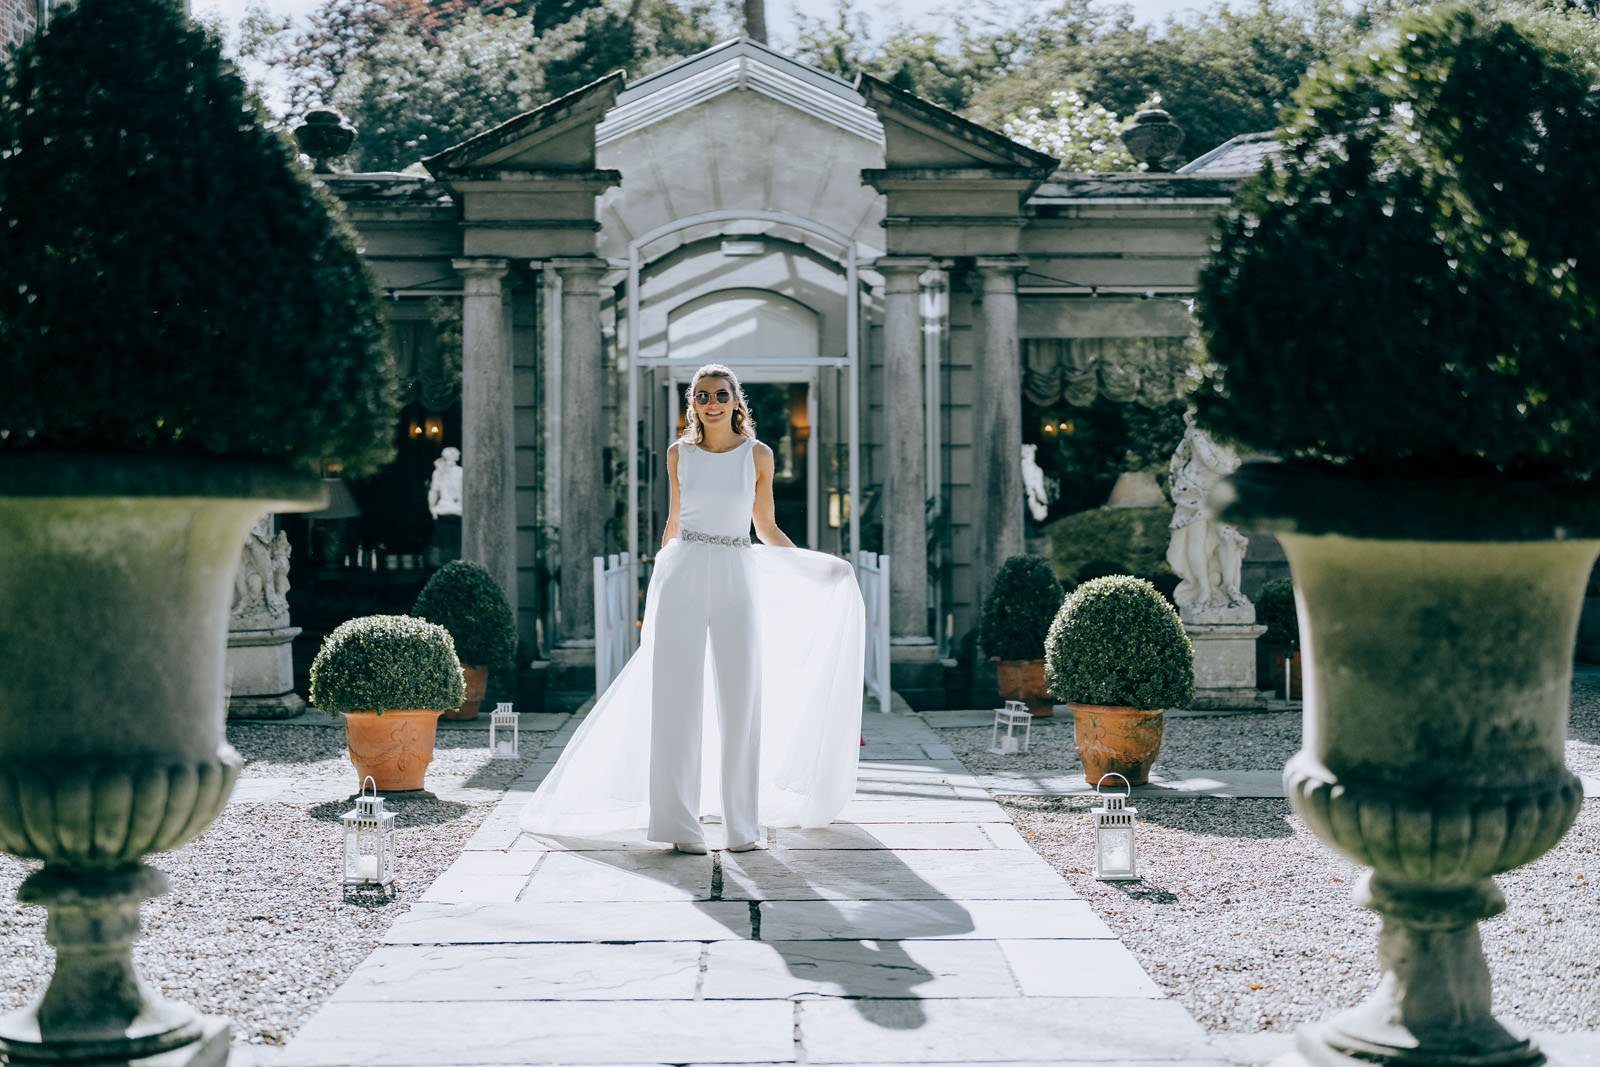 Marlfield_House-best-wedding-venues-Ireland-17.jpg